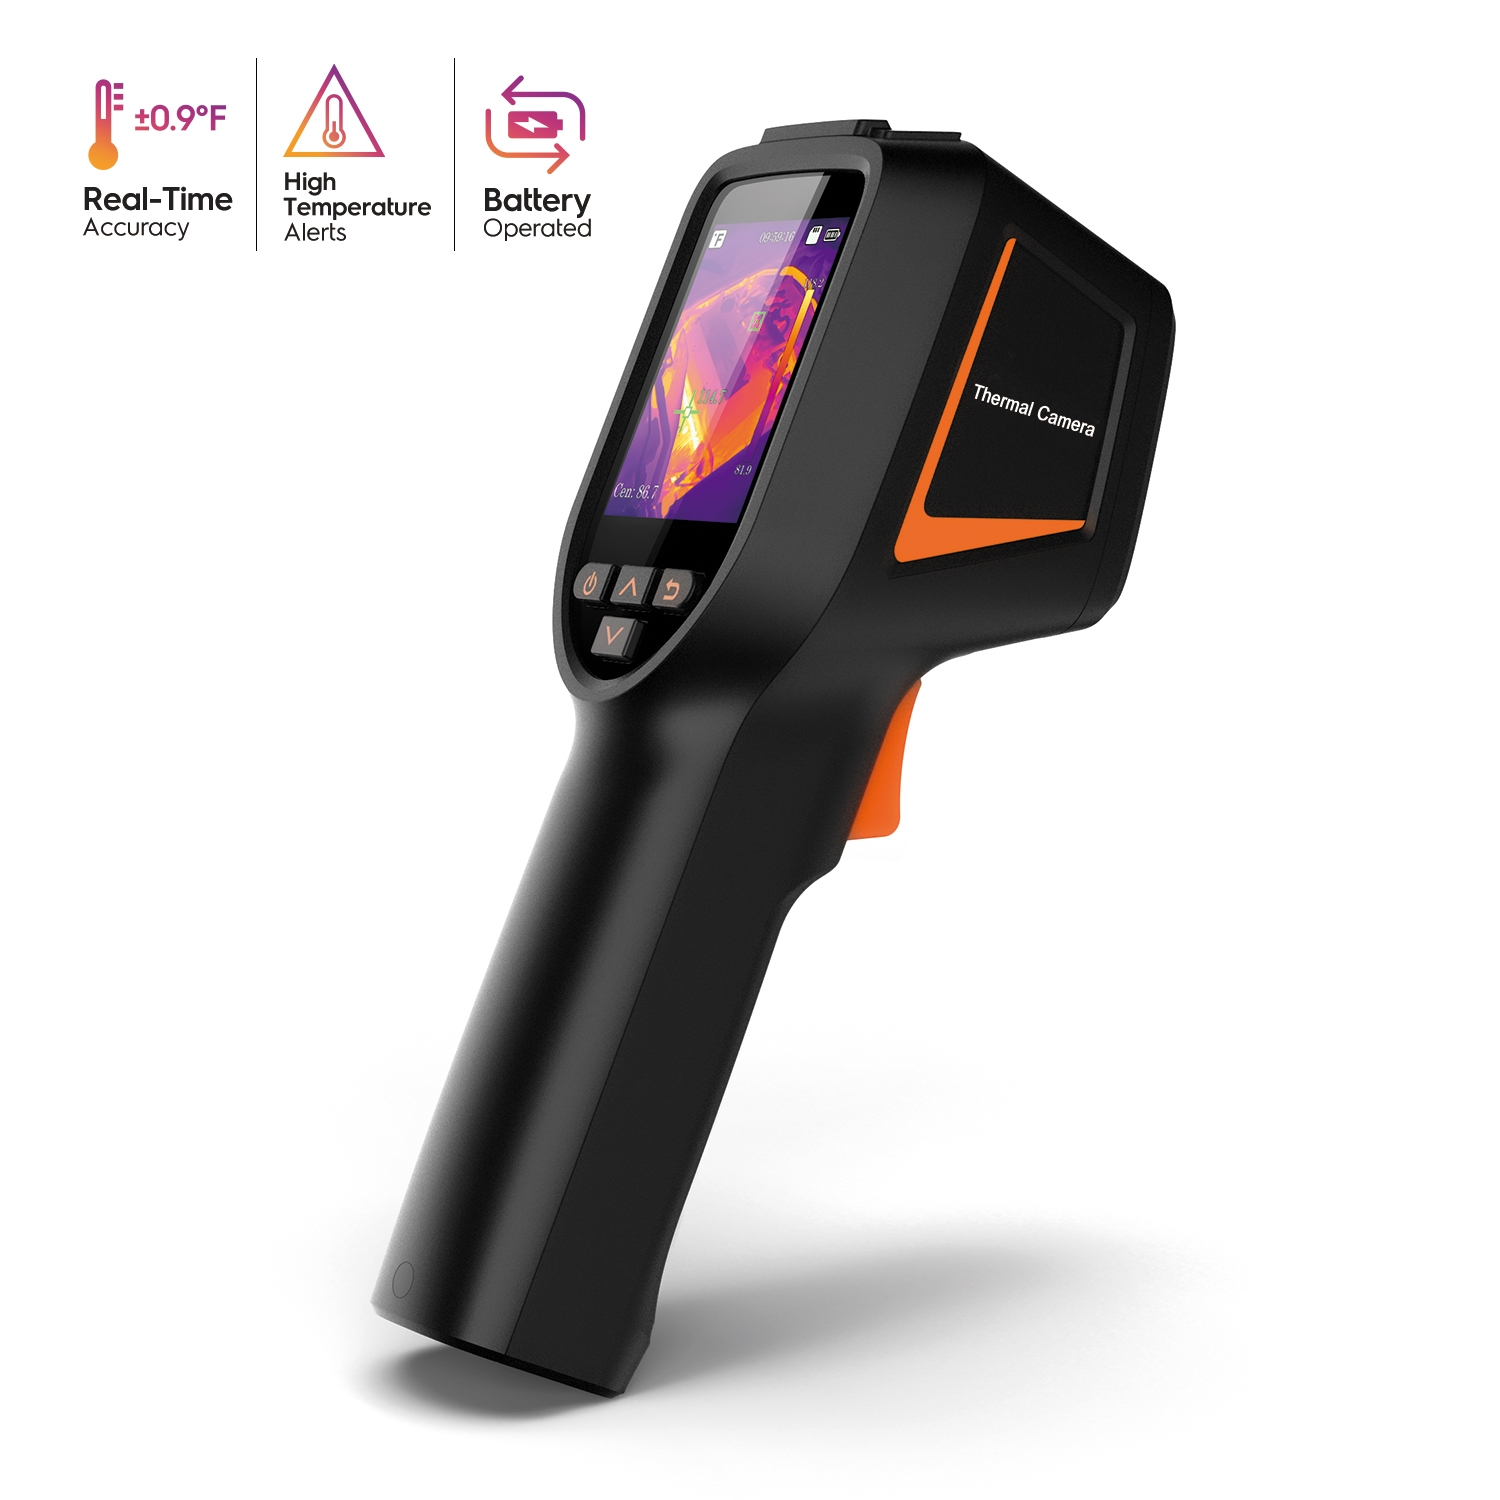 Handheld Thermal Imaging Camera Infrared Thermometer Imager LCD Display IR US 